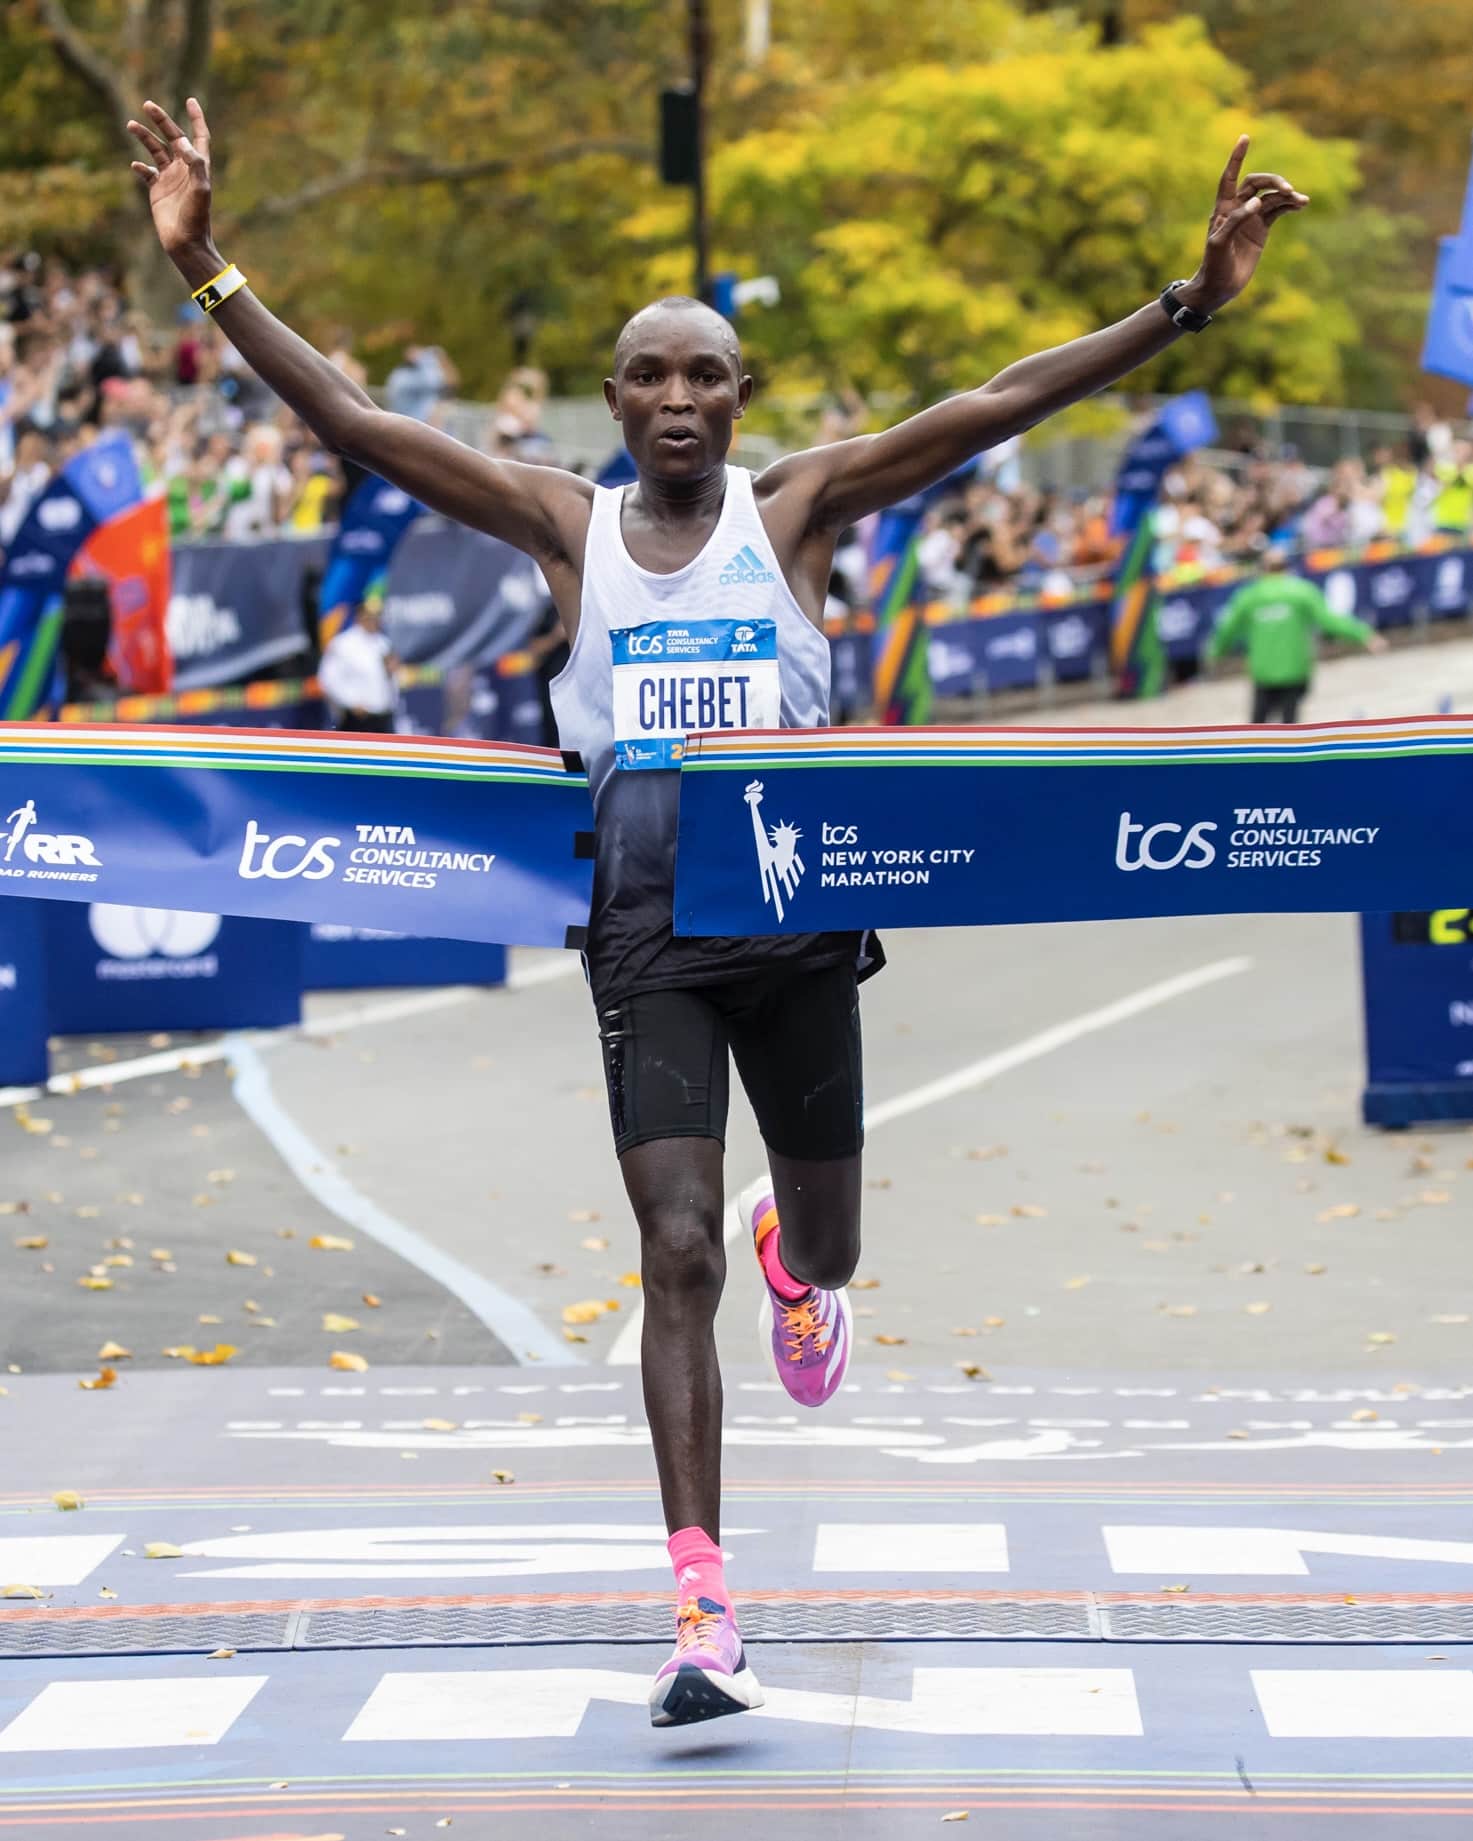 Chebet used Boston Marathon’s win as preparation for New York